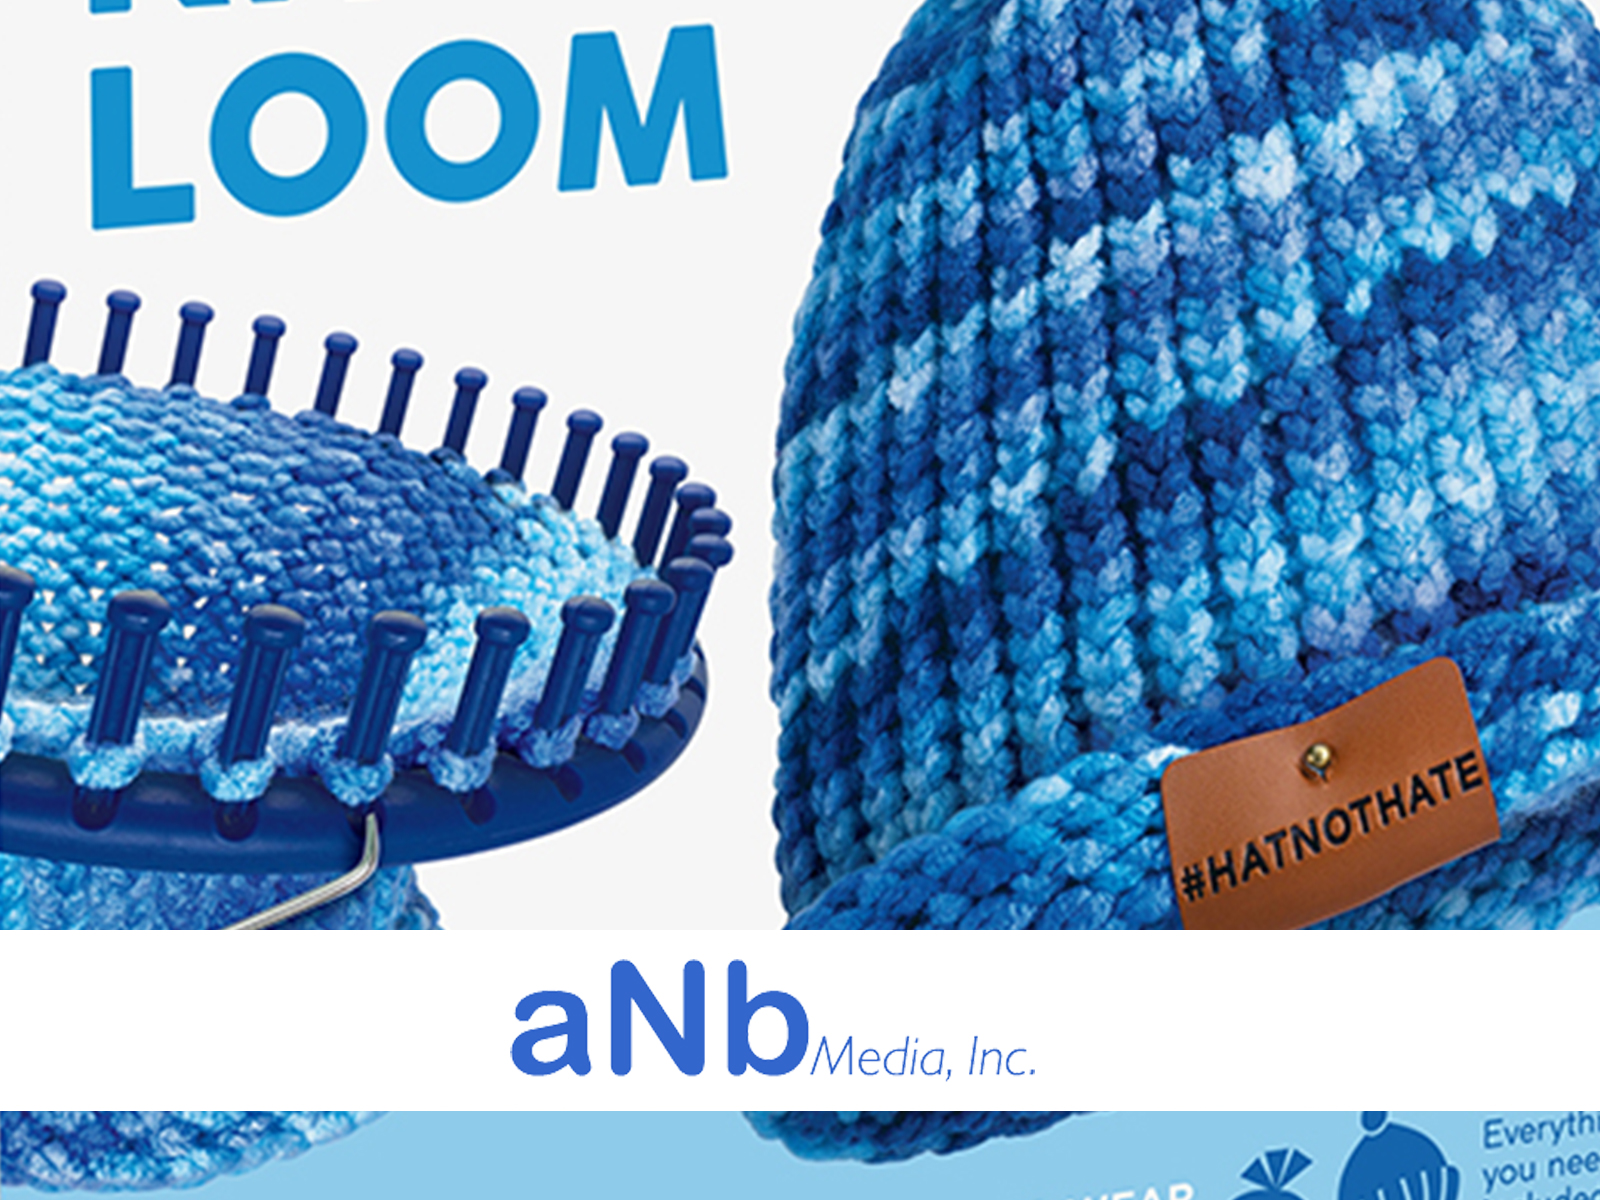 anb media, inc. logo overlaid on image of Quick Knit Loom kit